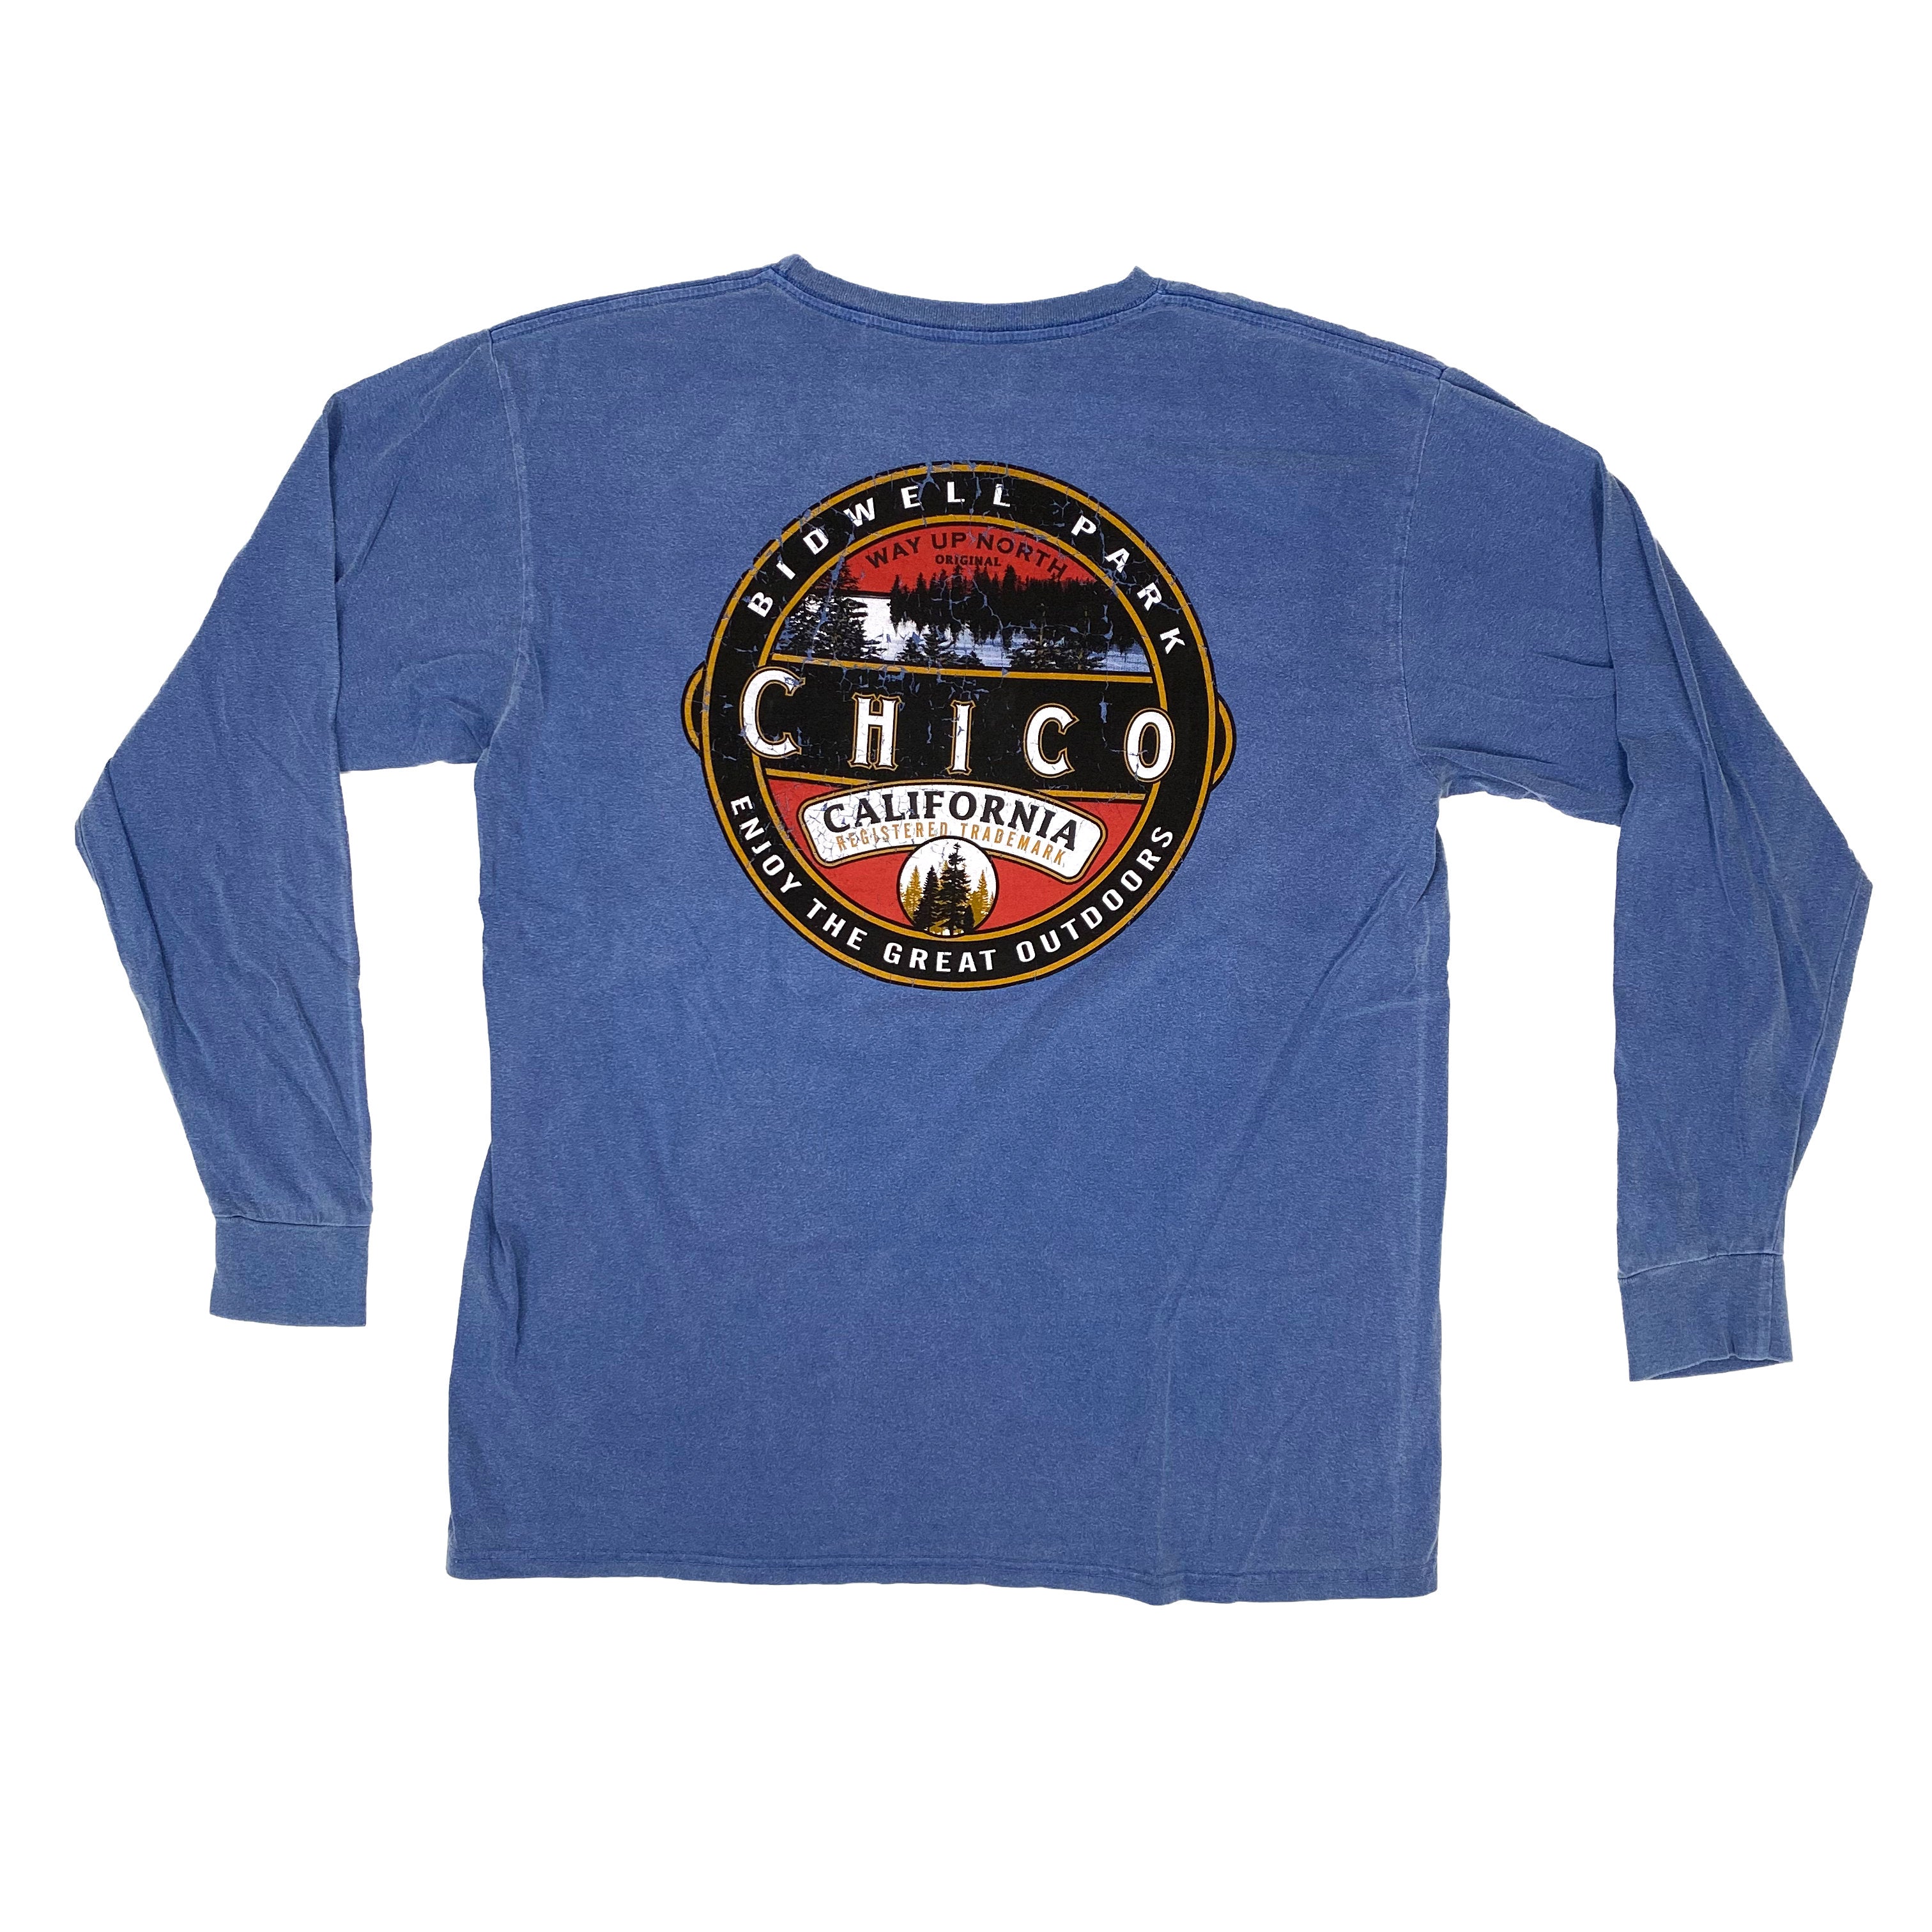 Carson Way Up North Chico - Long Sleeve T-Shirt    